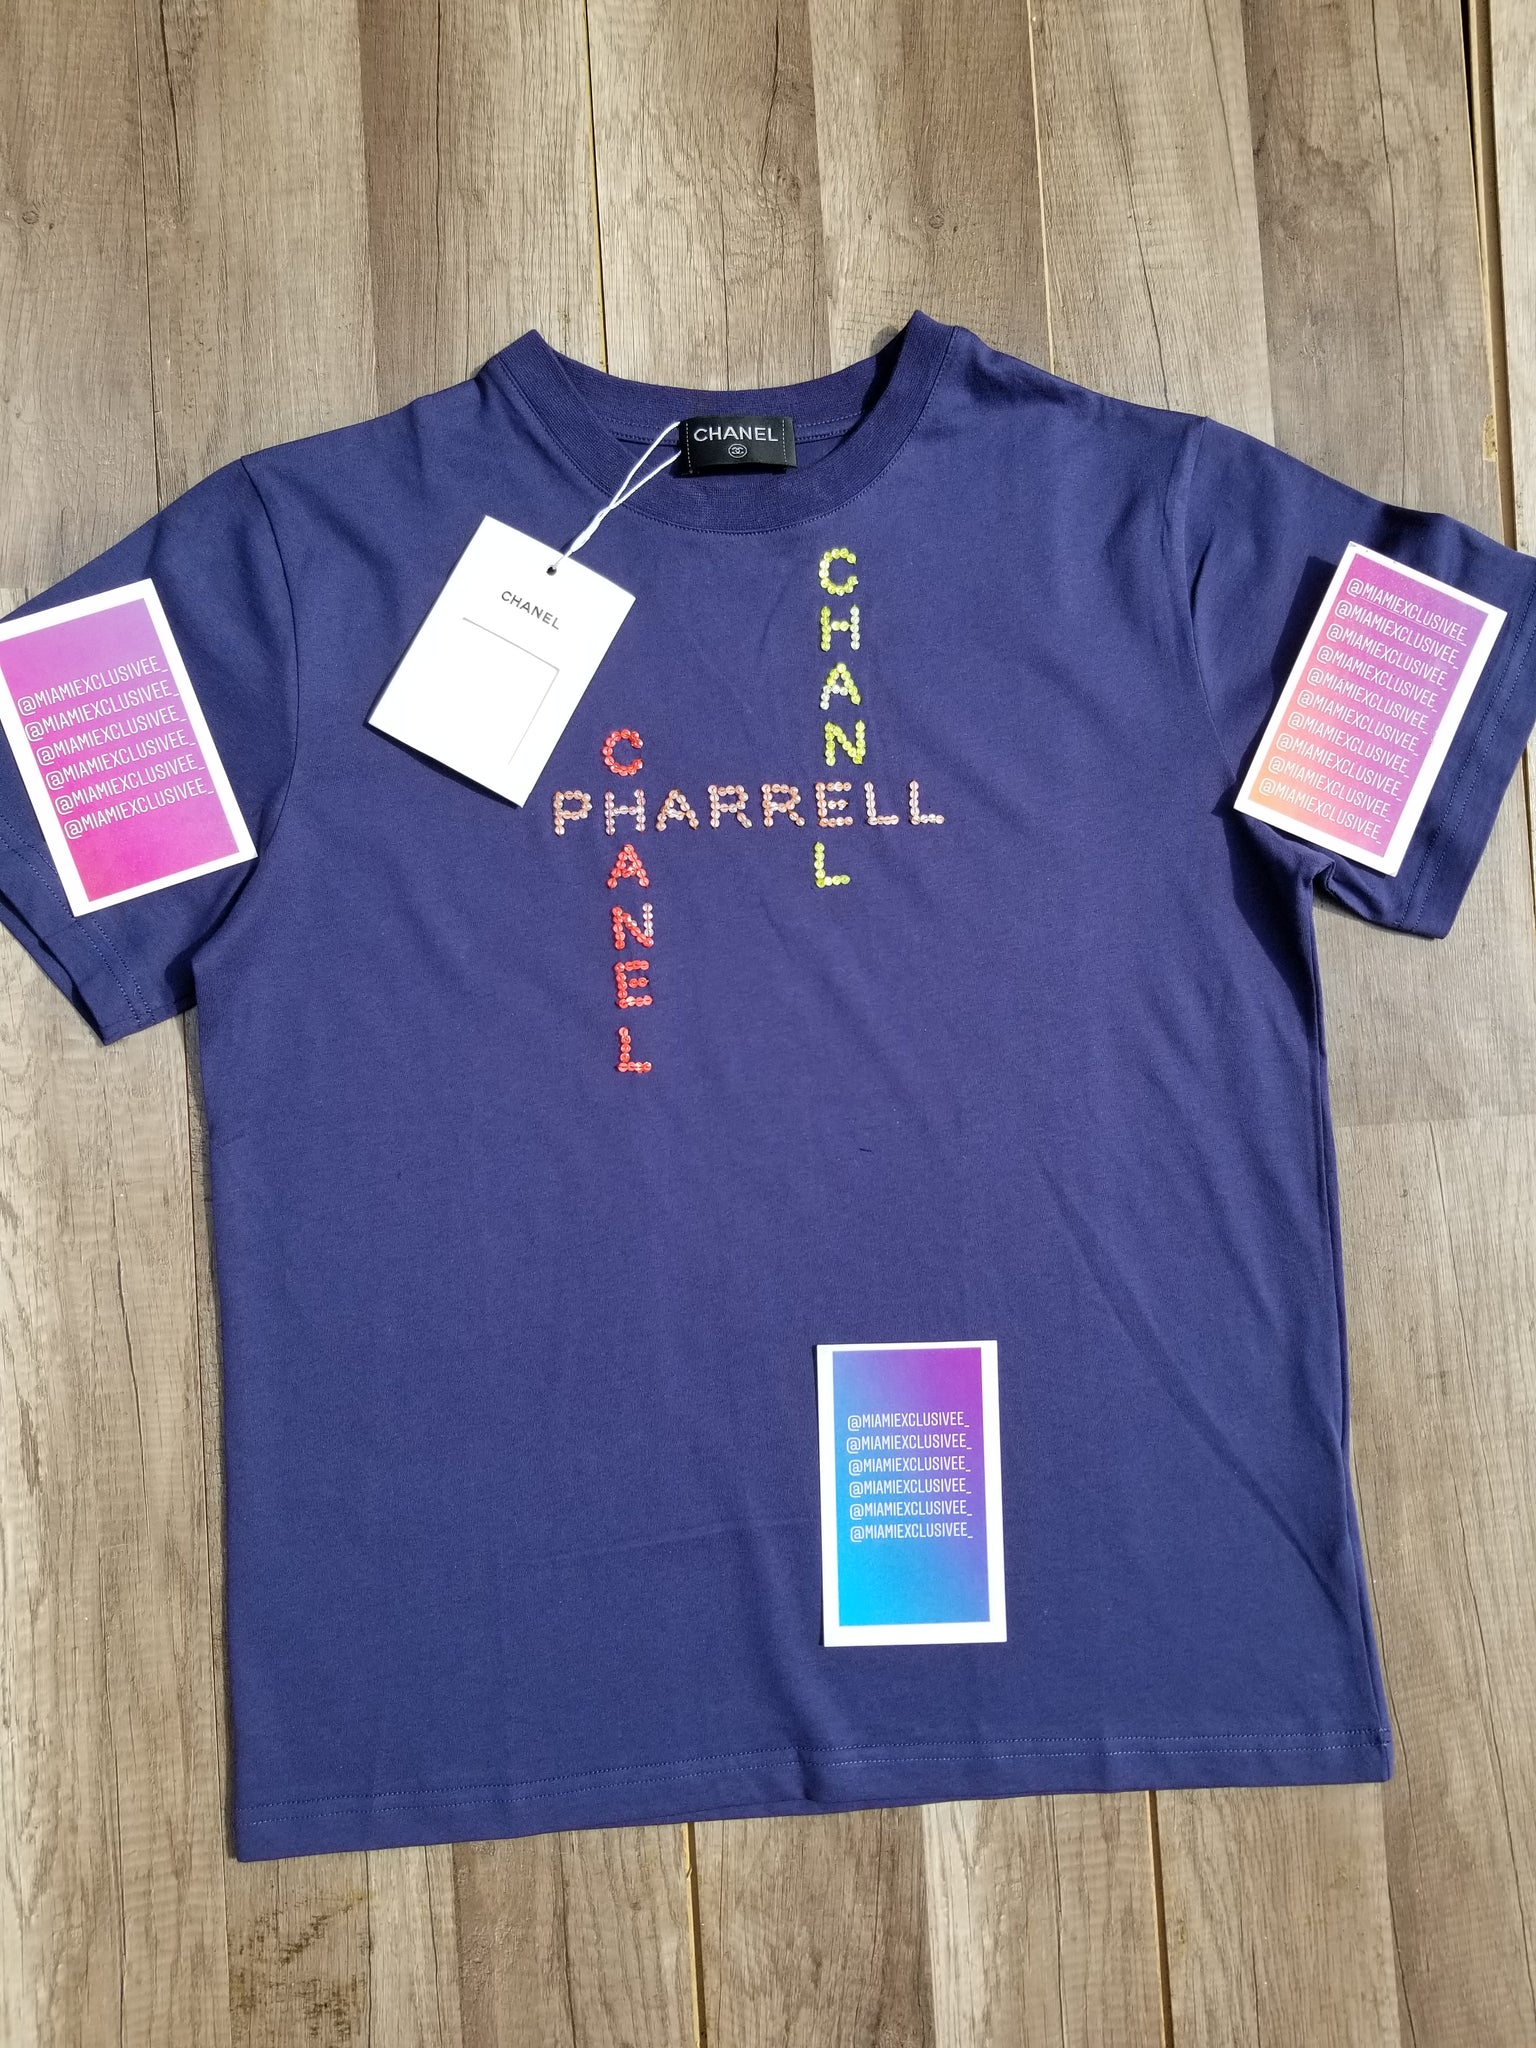 chanel pharrell t shirt price